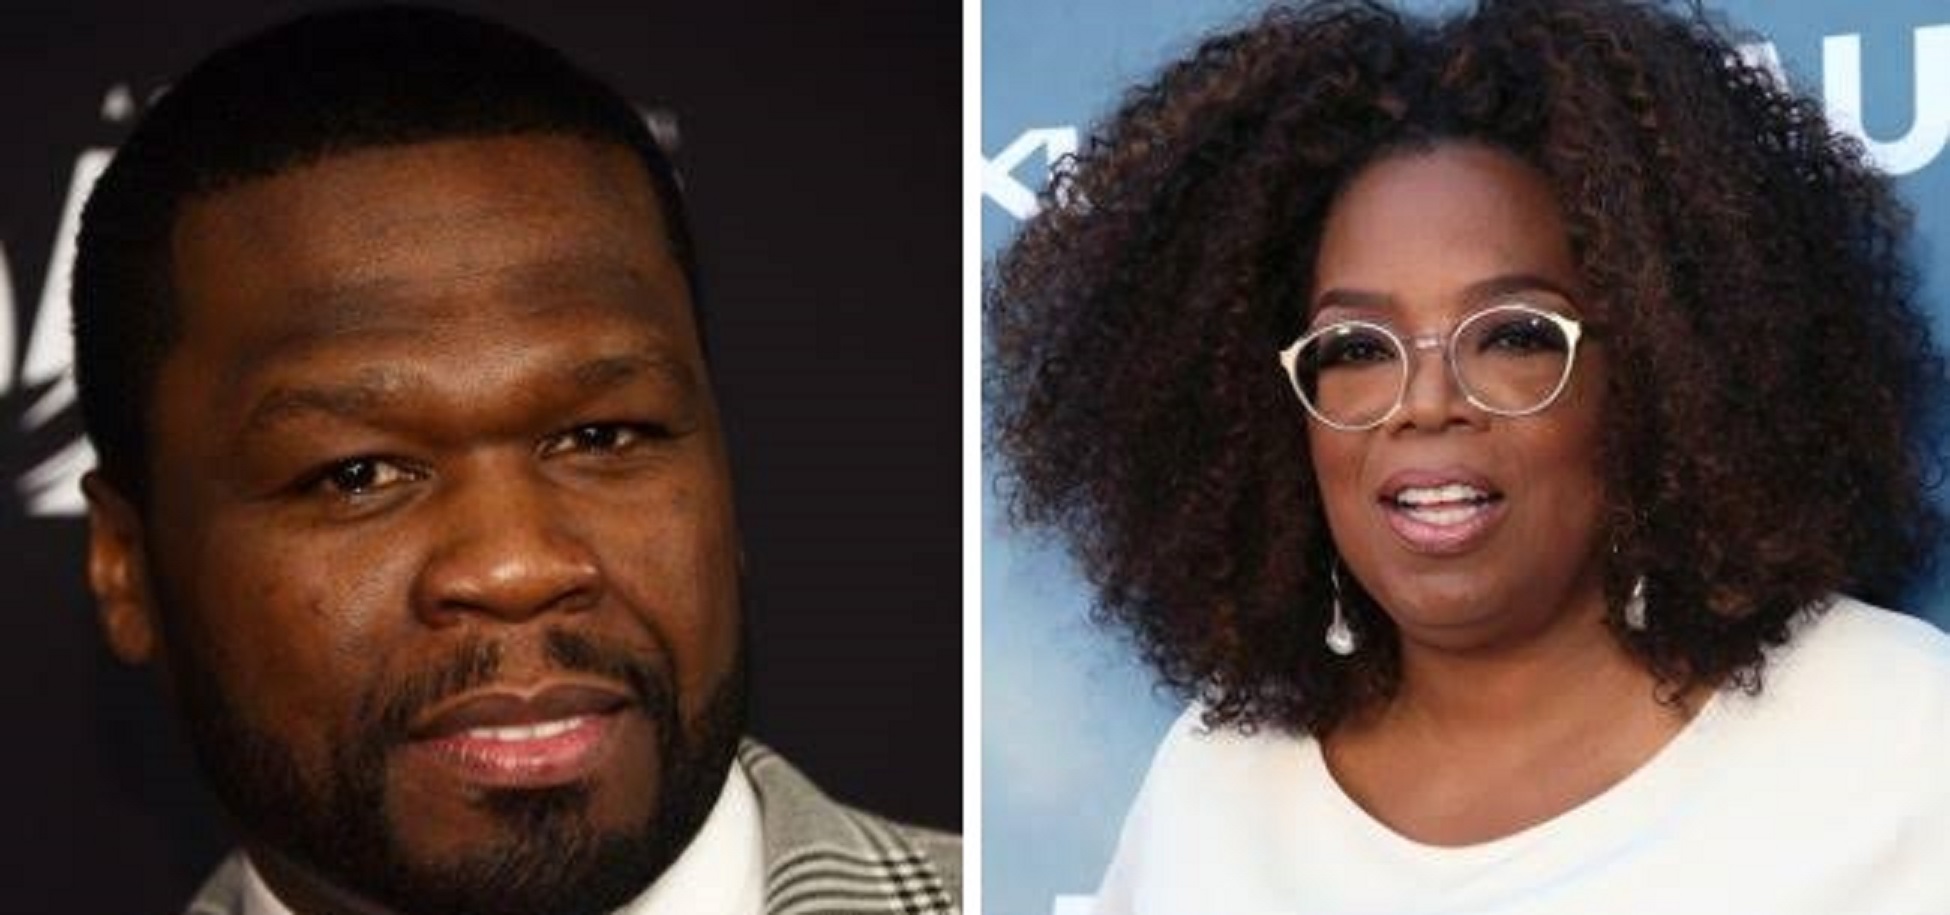 50 Cent Slams Oprah Winfrey For “Targeting Back Men” During #MeToo Movement